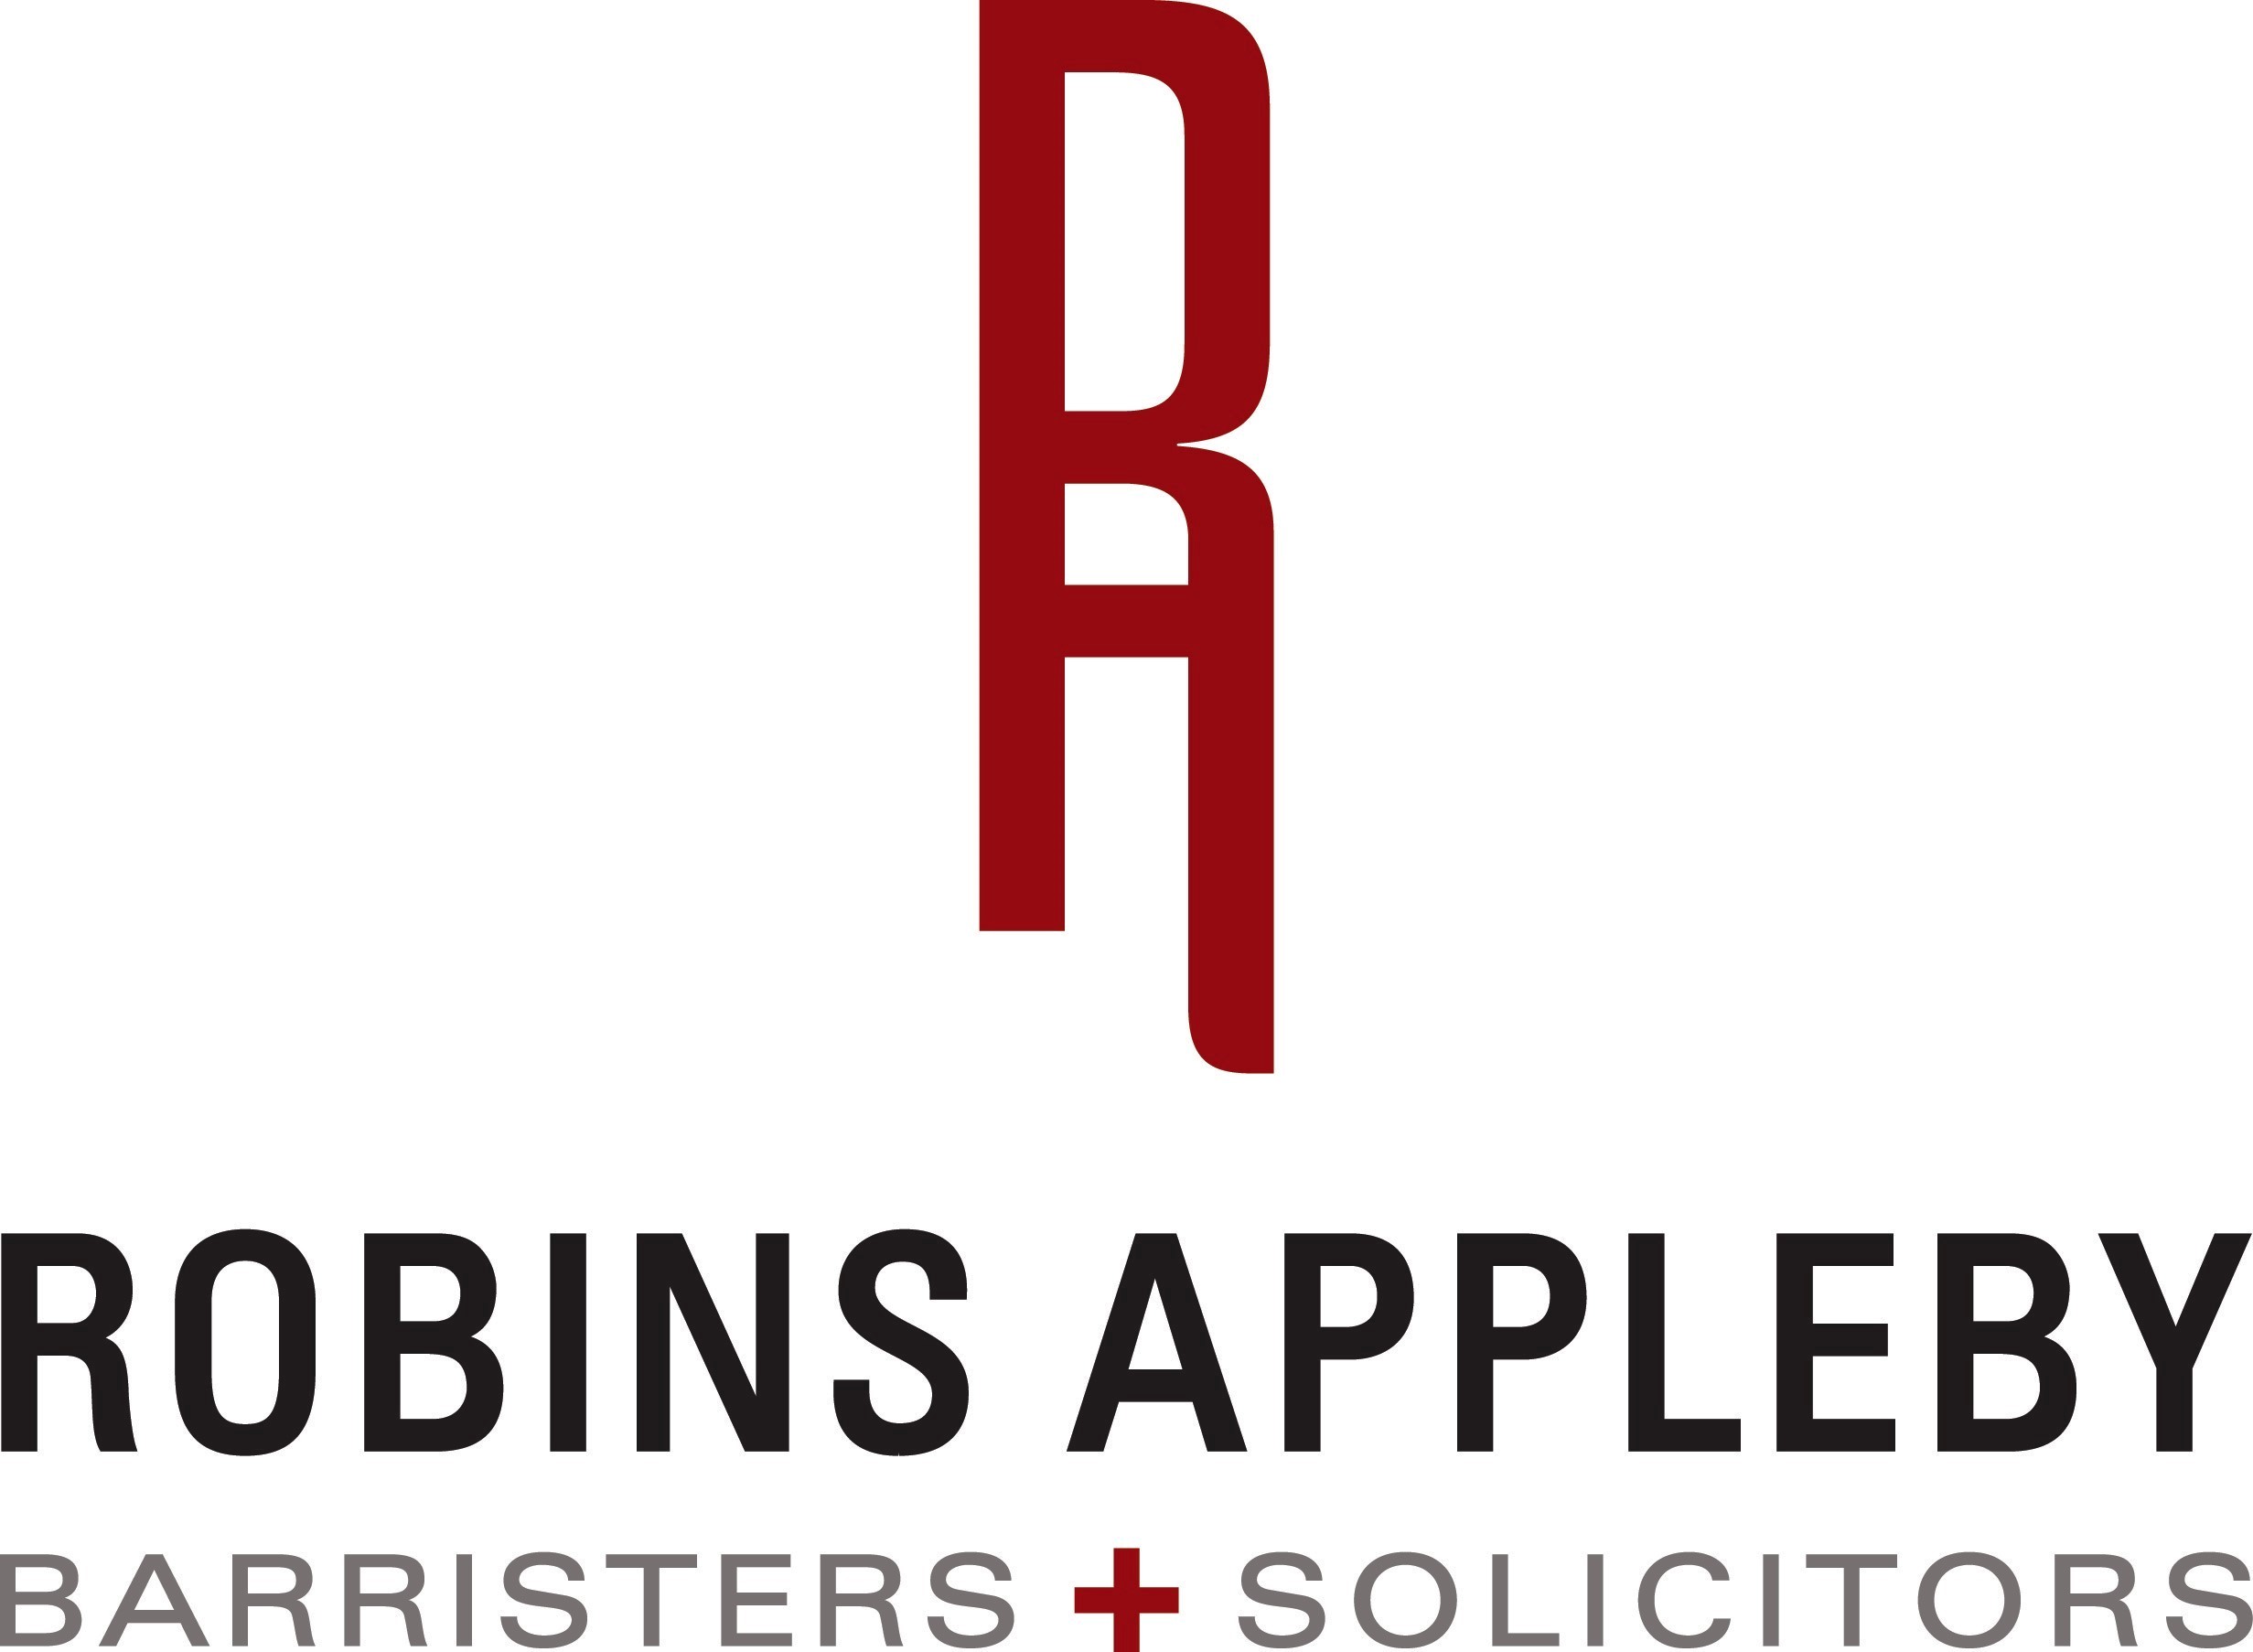 Robins Appleby LLP logo